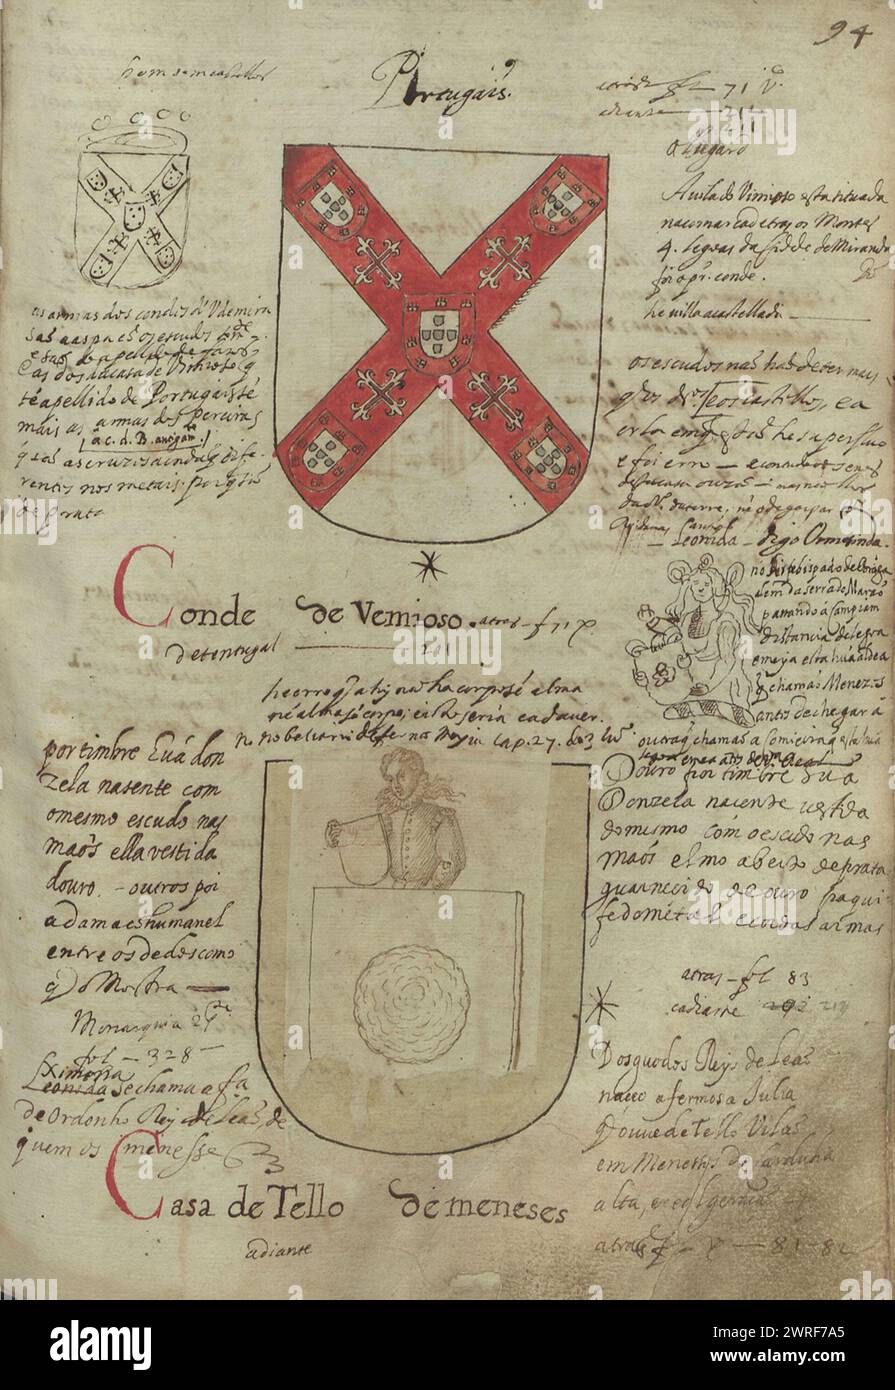 Conde de Vermioso und Casa de Tello Wappen Stockfoto